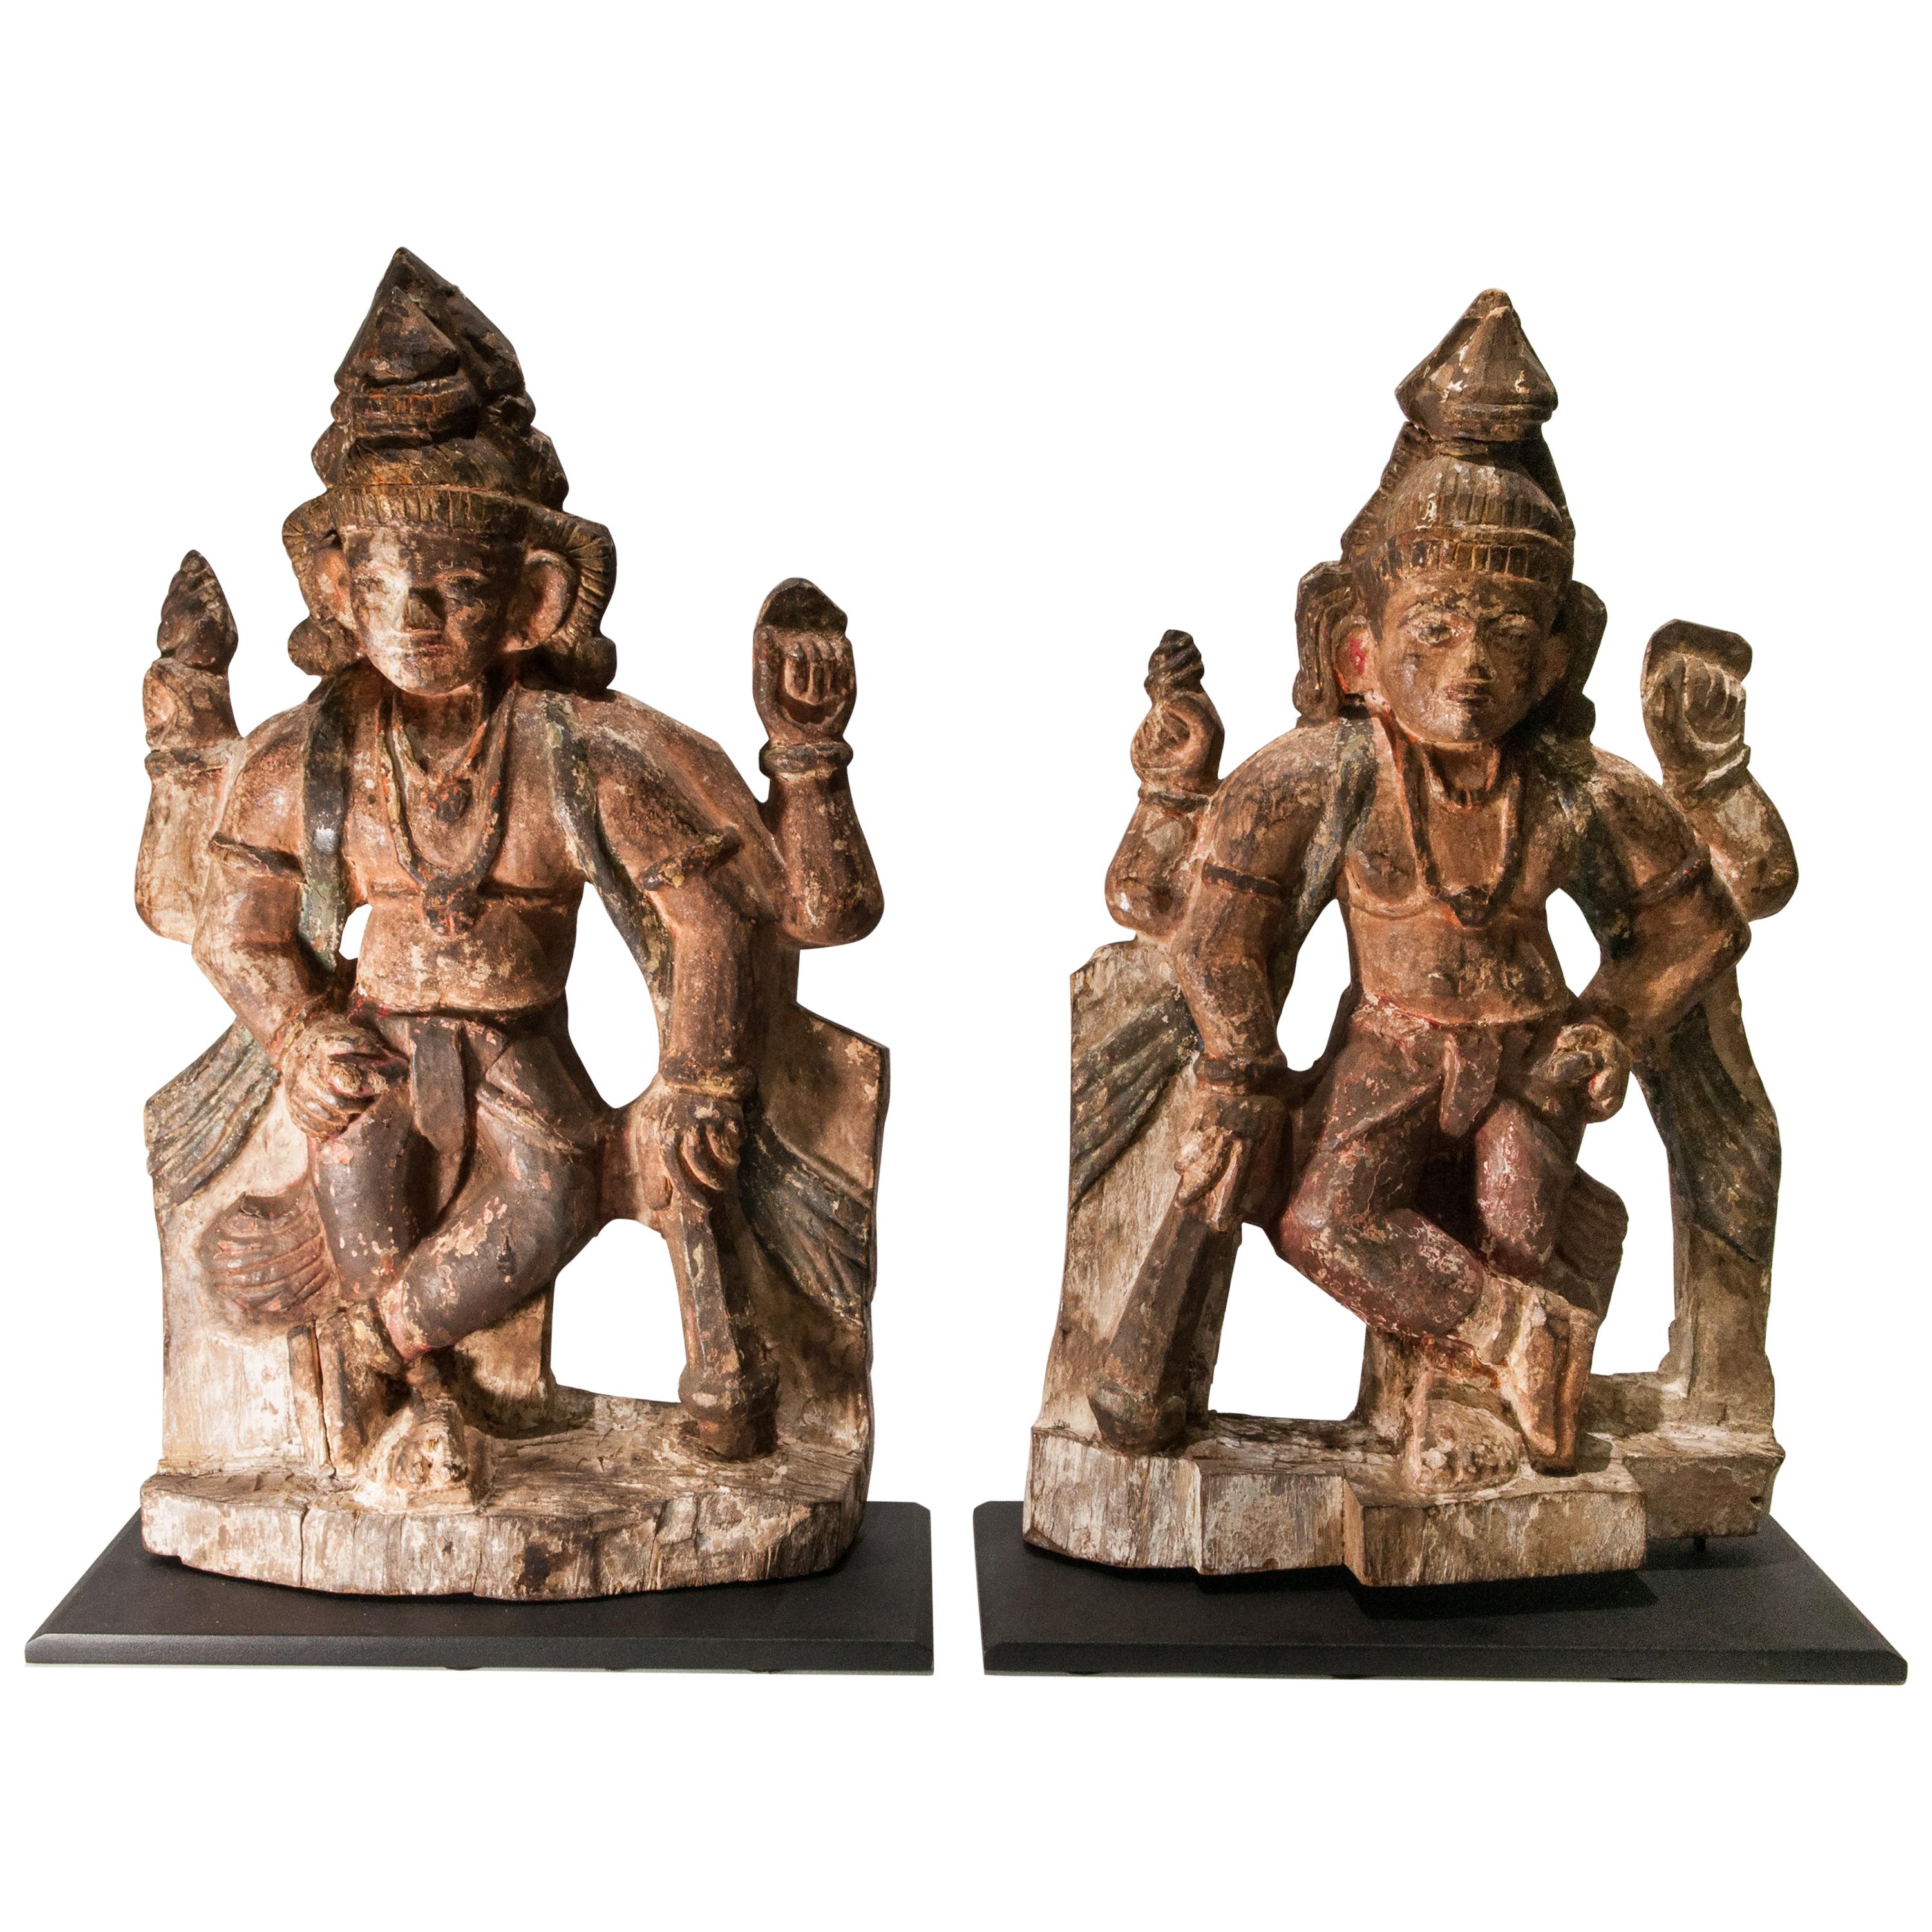 Pair of Vintage Wood Guardian Statues from India Early 20th Century, Jaya-Vijaya